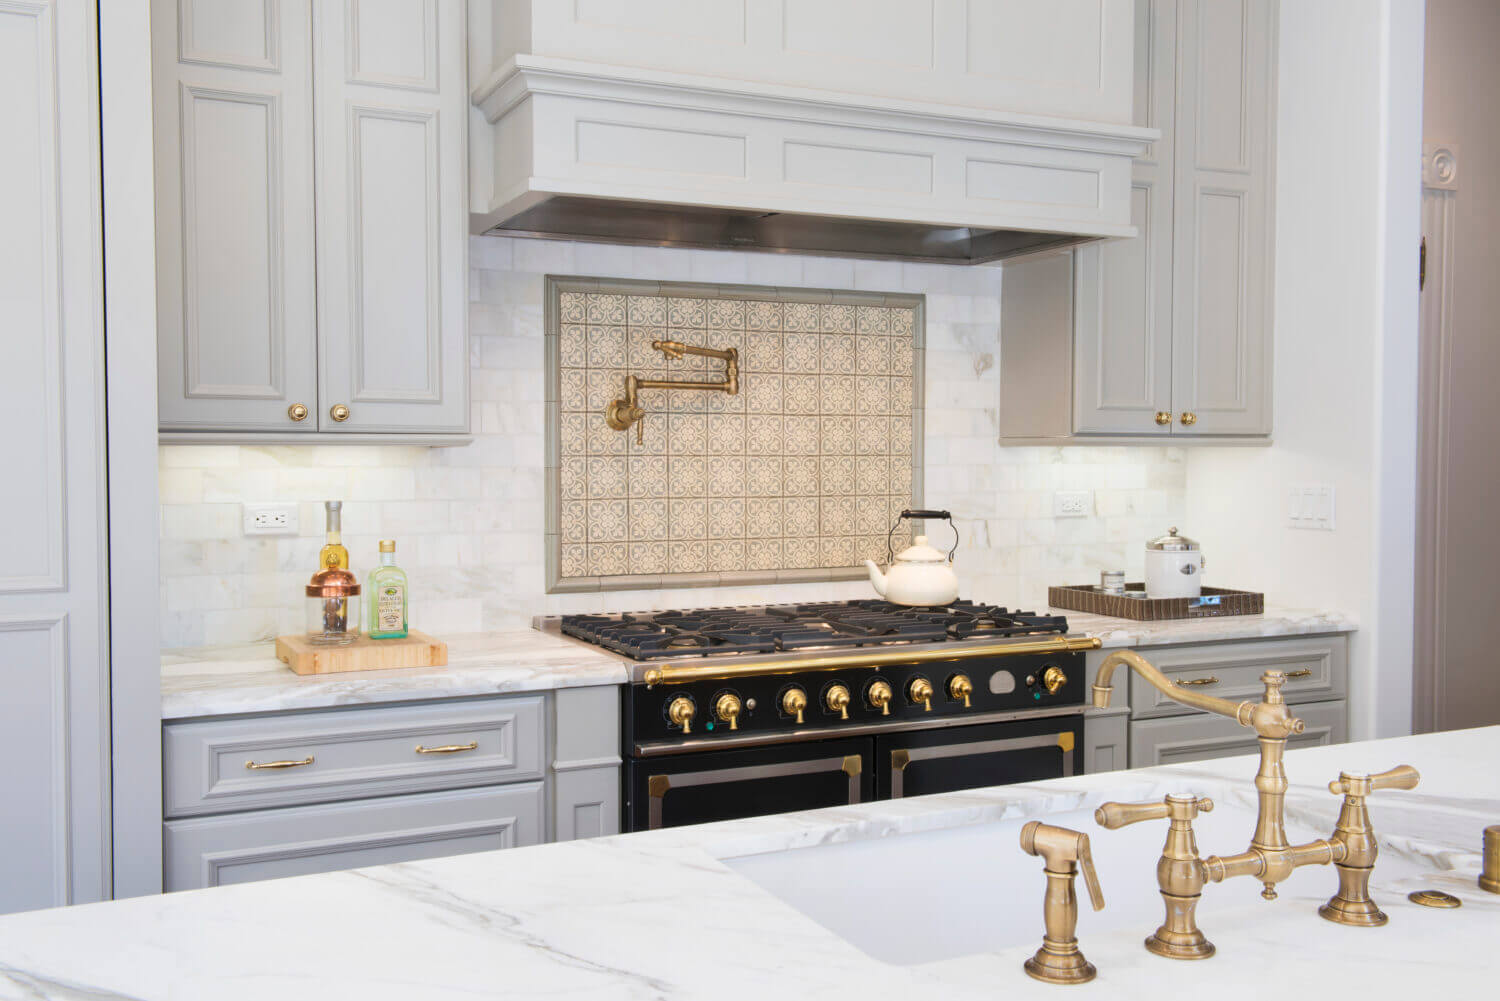 This elegant Dura Supreme kitchen adorned with brassy gold accents was designed by Joyce Van Den Dungen Bille of Gilmans Kitchens and Baths, California.